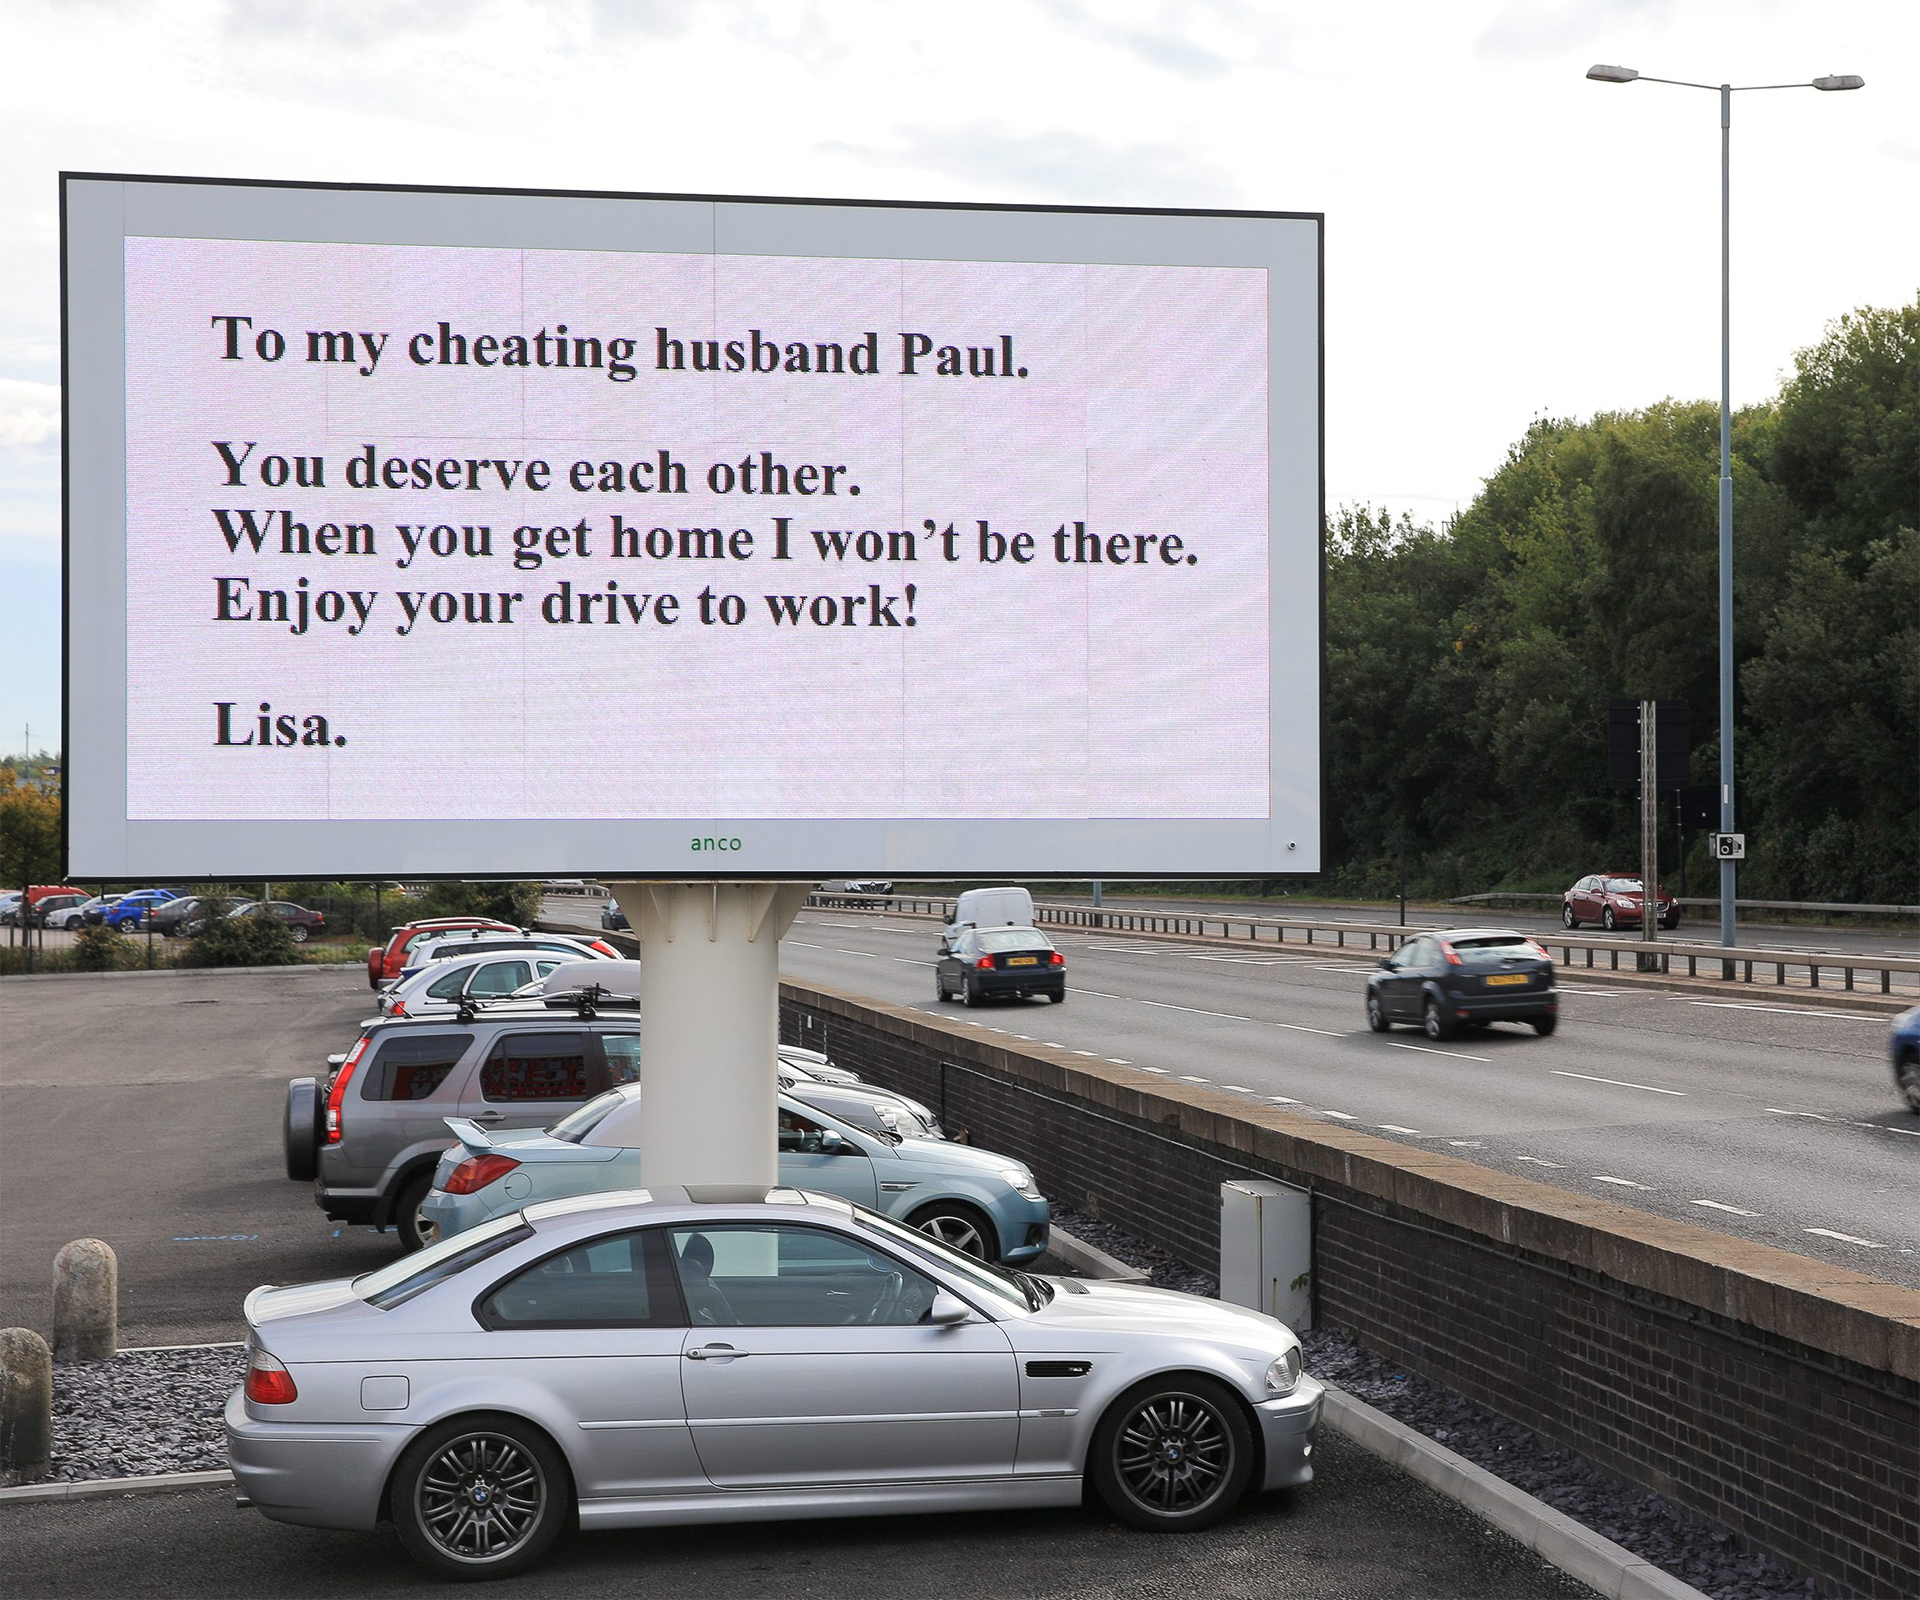 Scorned wife gets last laugh with motorway billboard